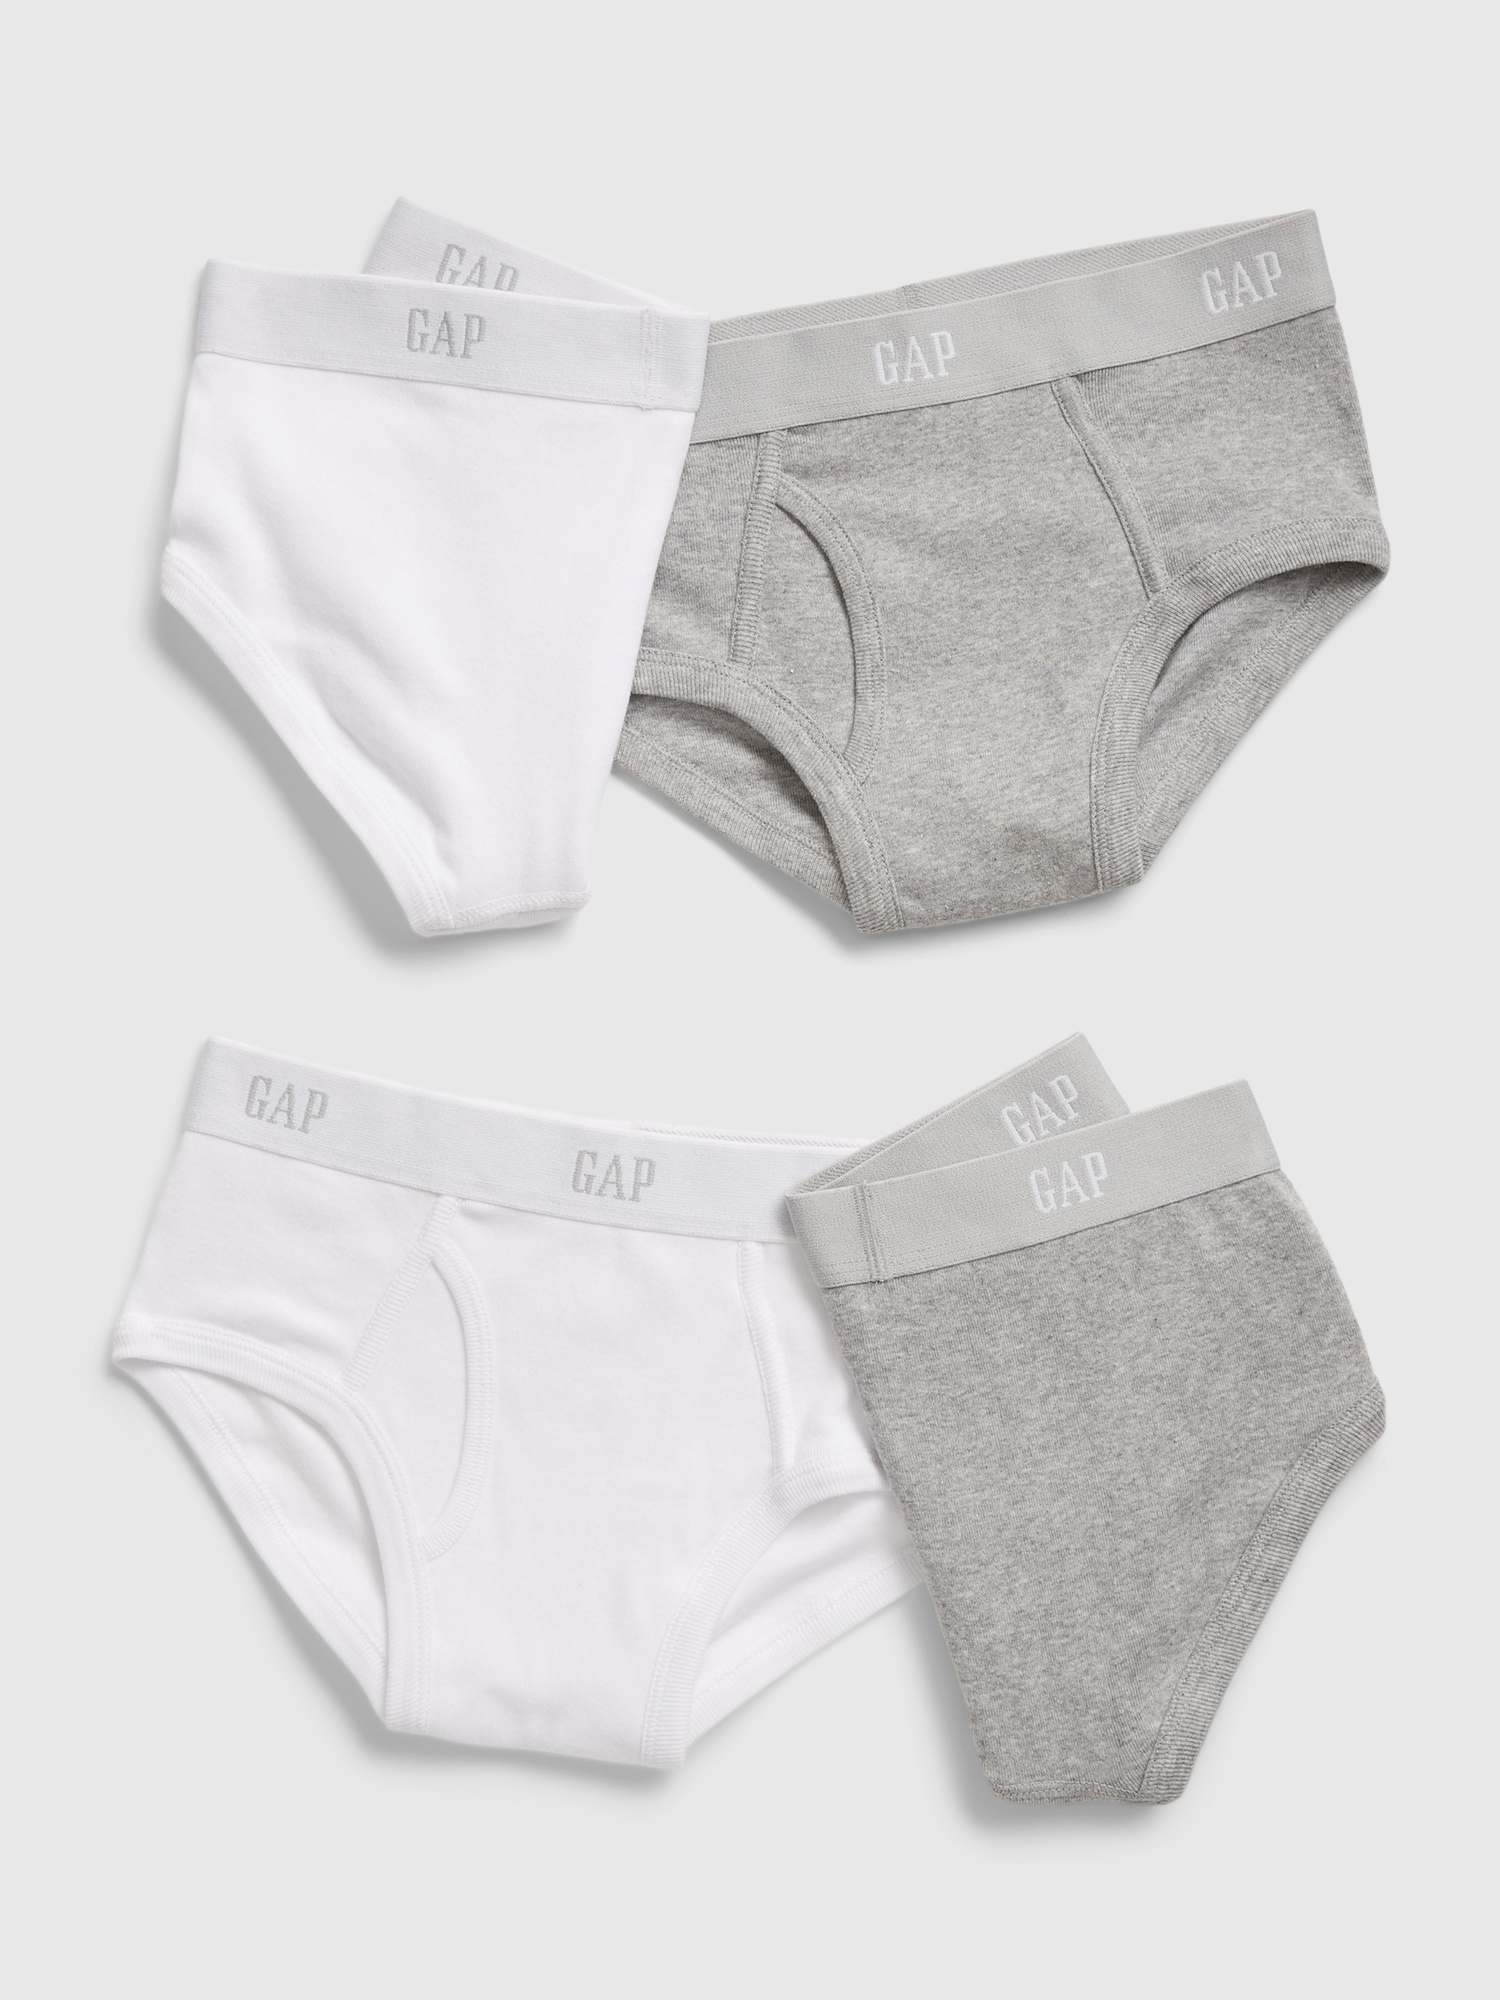 GAP, Underwear & Socks, Gap 2 Pack Briefs